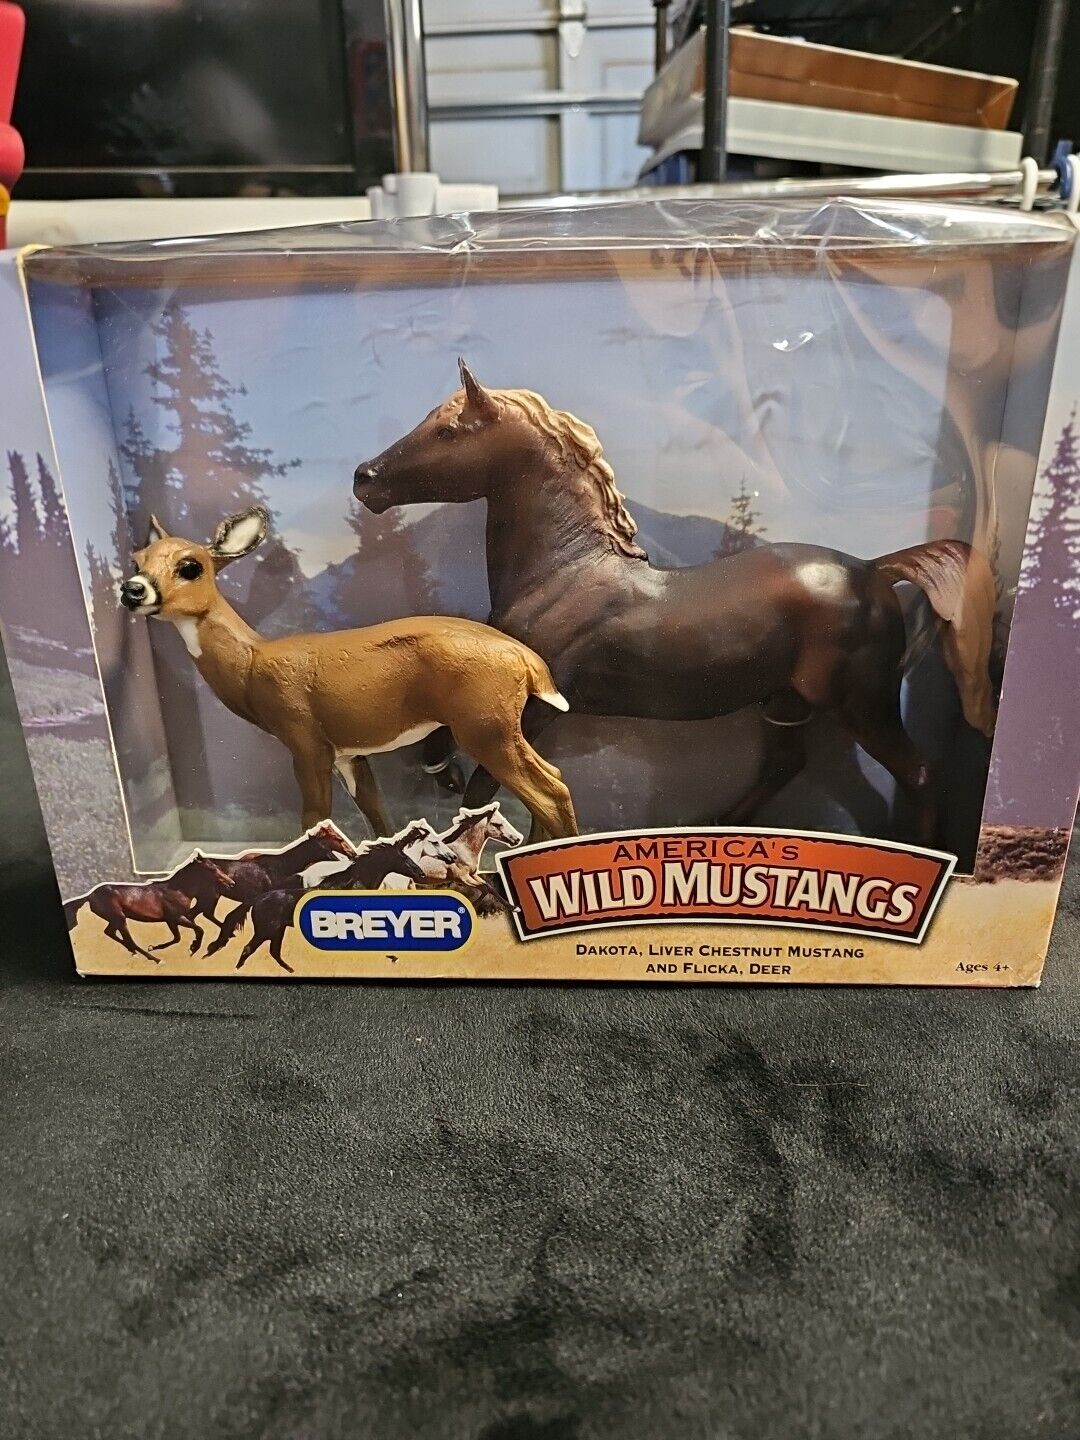 Breyer America's Wild Mustangs - Dakota, Liver Chestnut Mustang and Flicka, Deer